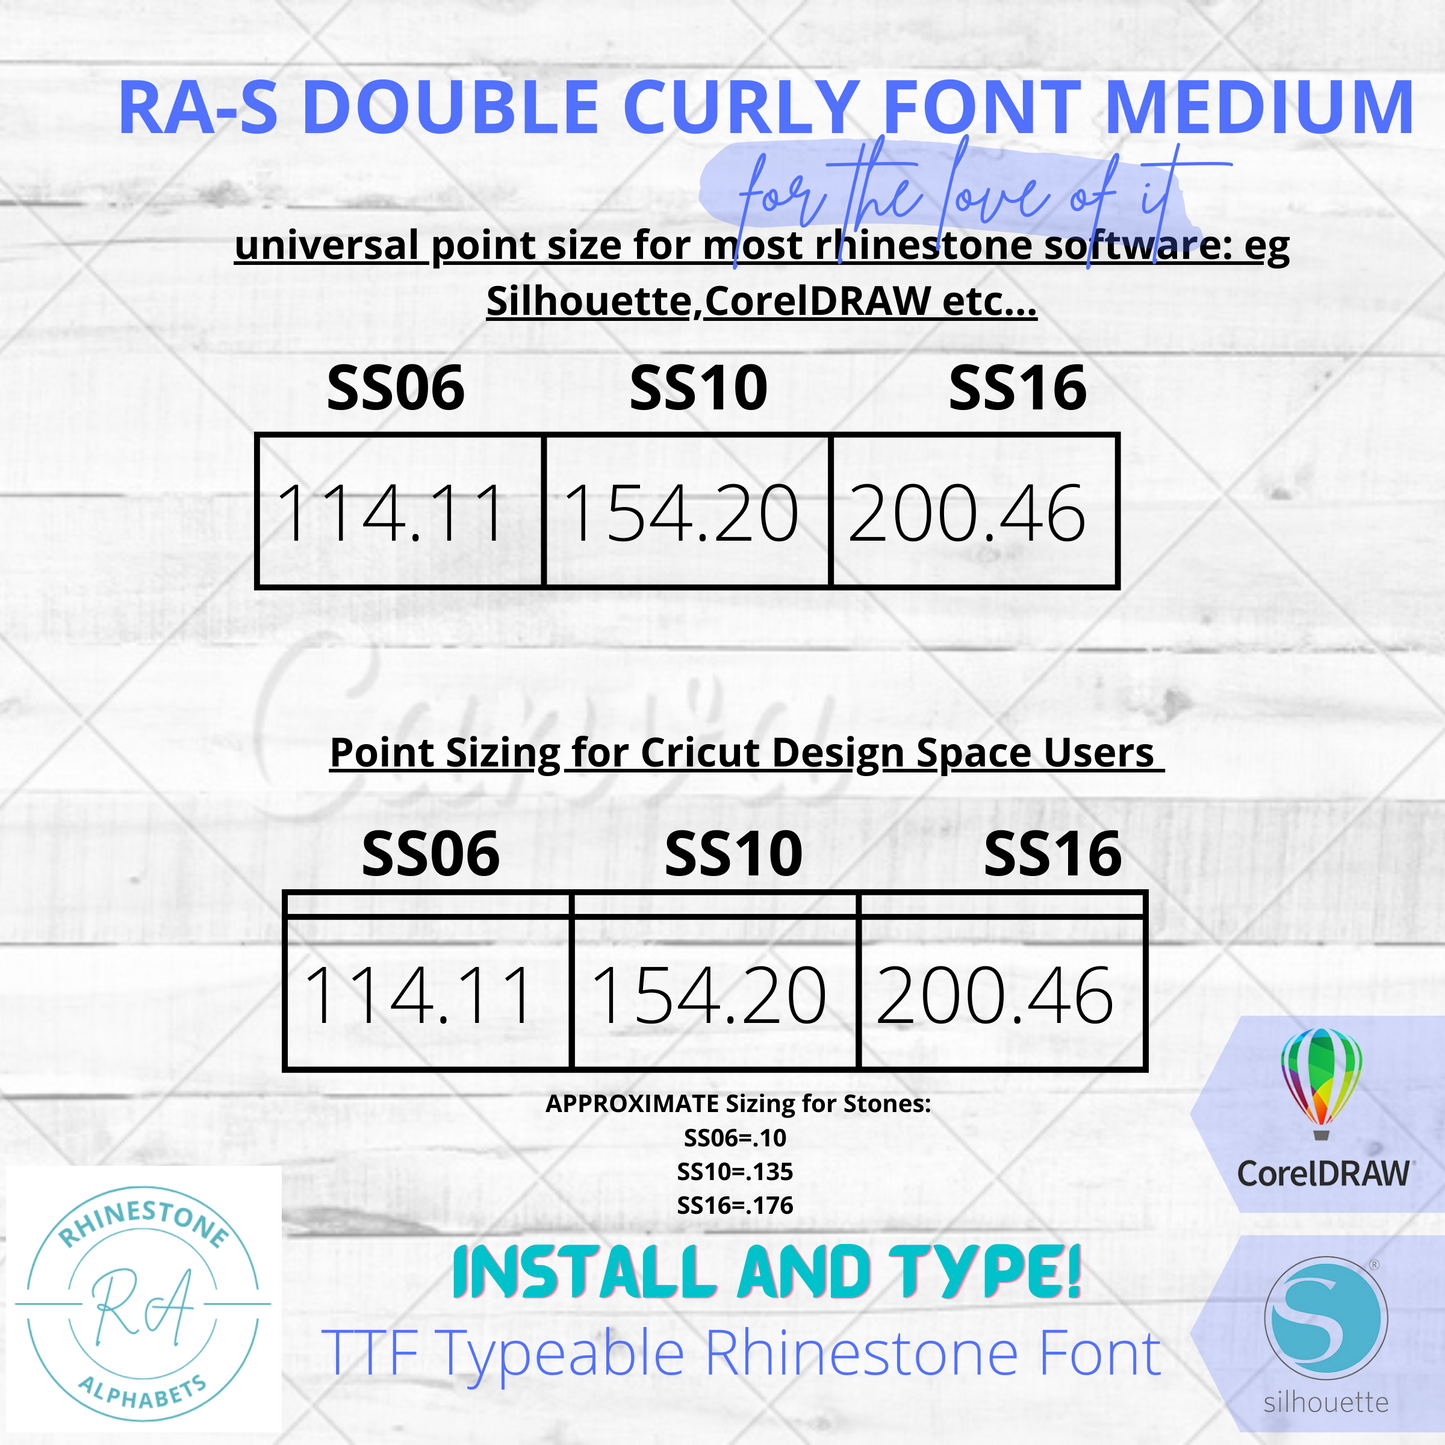 RA-S Double Curly Font Medium  A TTF True type Rhinestone Font